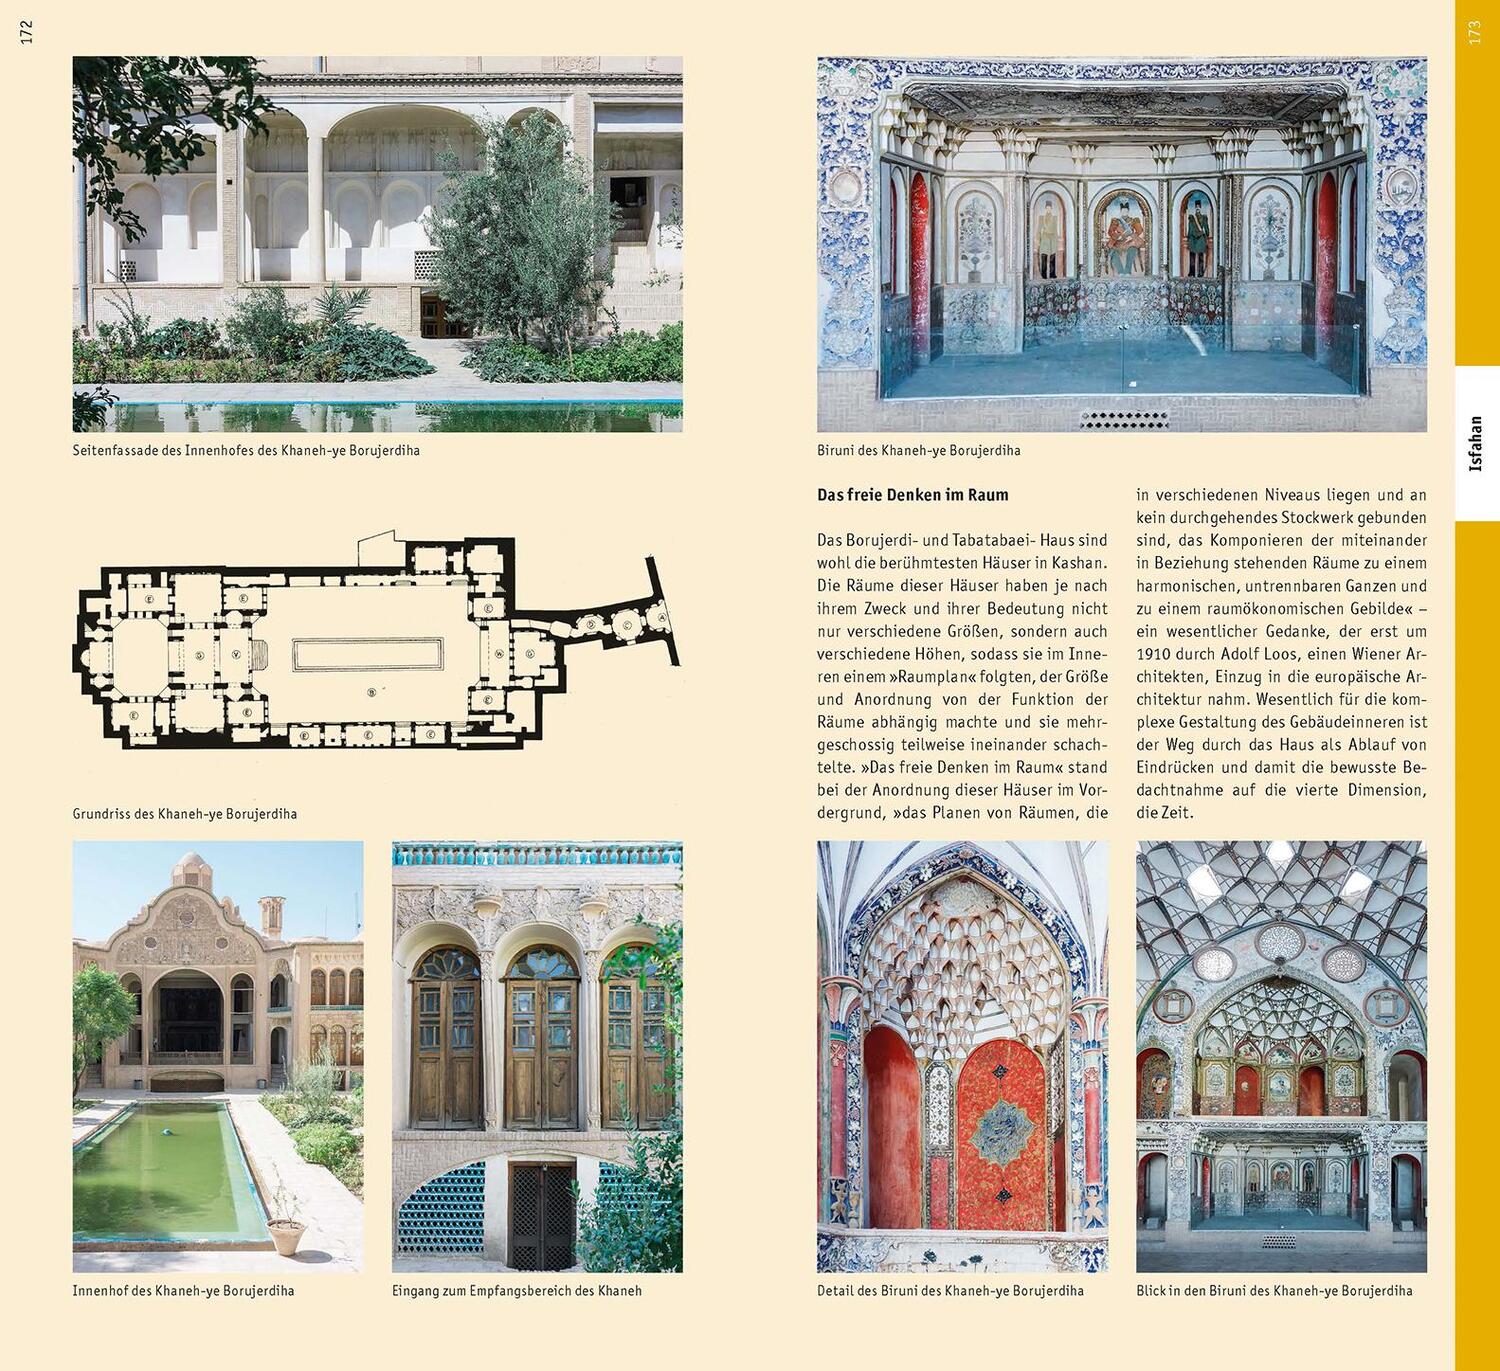 Bild: 9783869223926 | Architekturführer Iran | Teheran / Isfahan / Shiraz | Meyer-Wieser